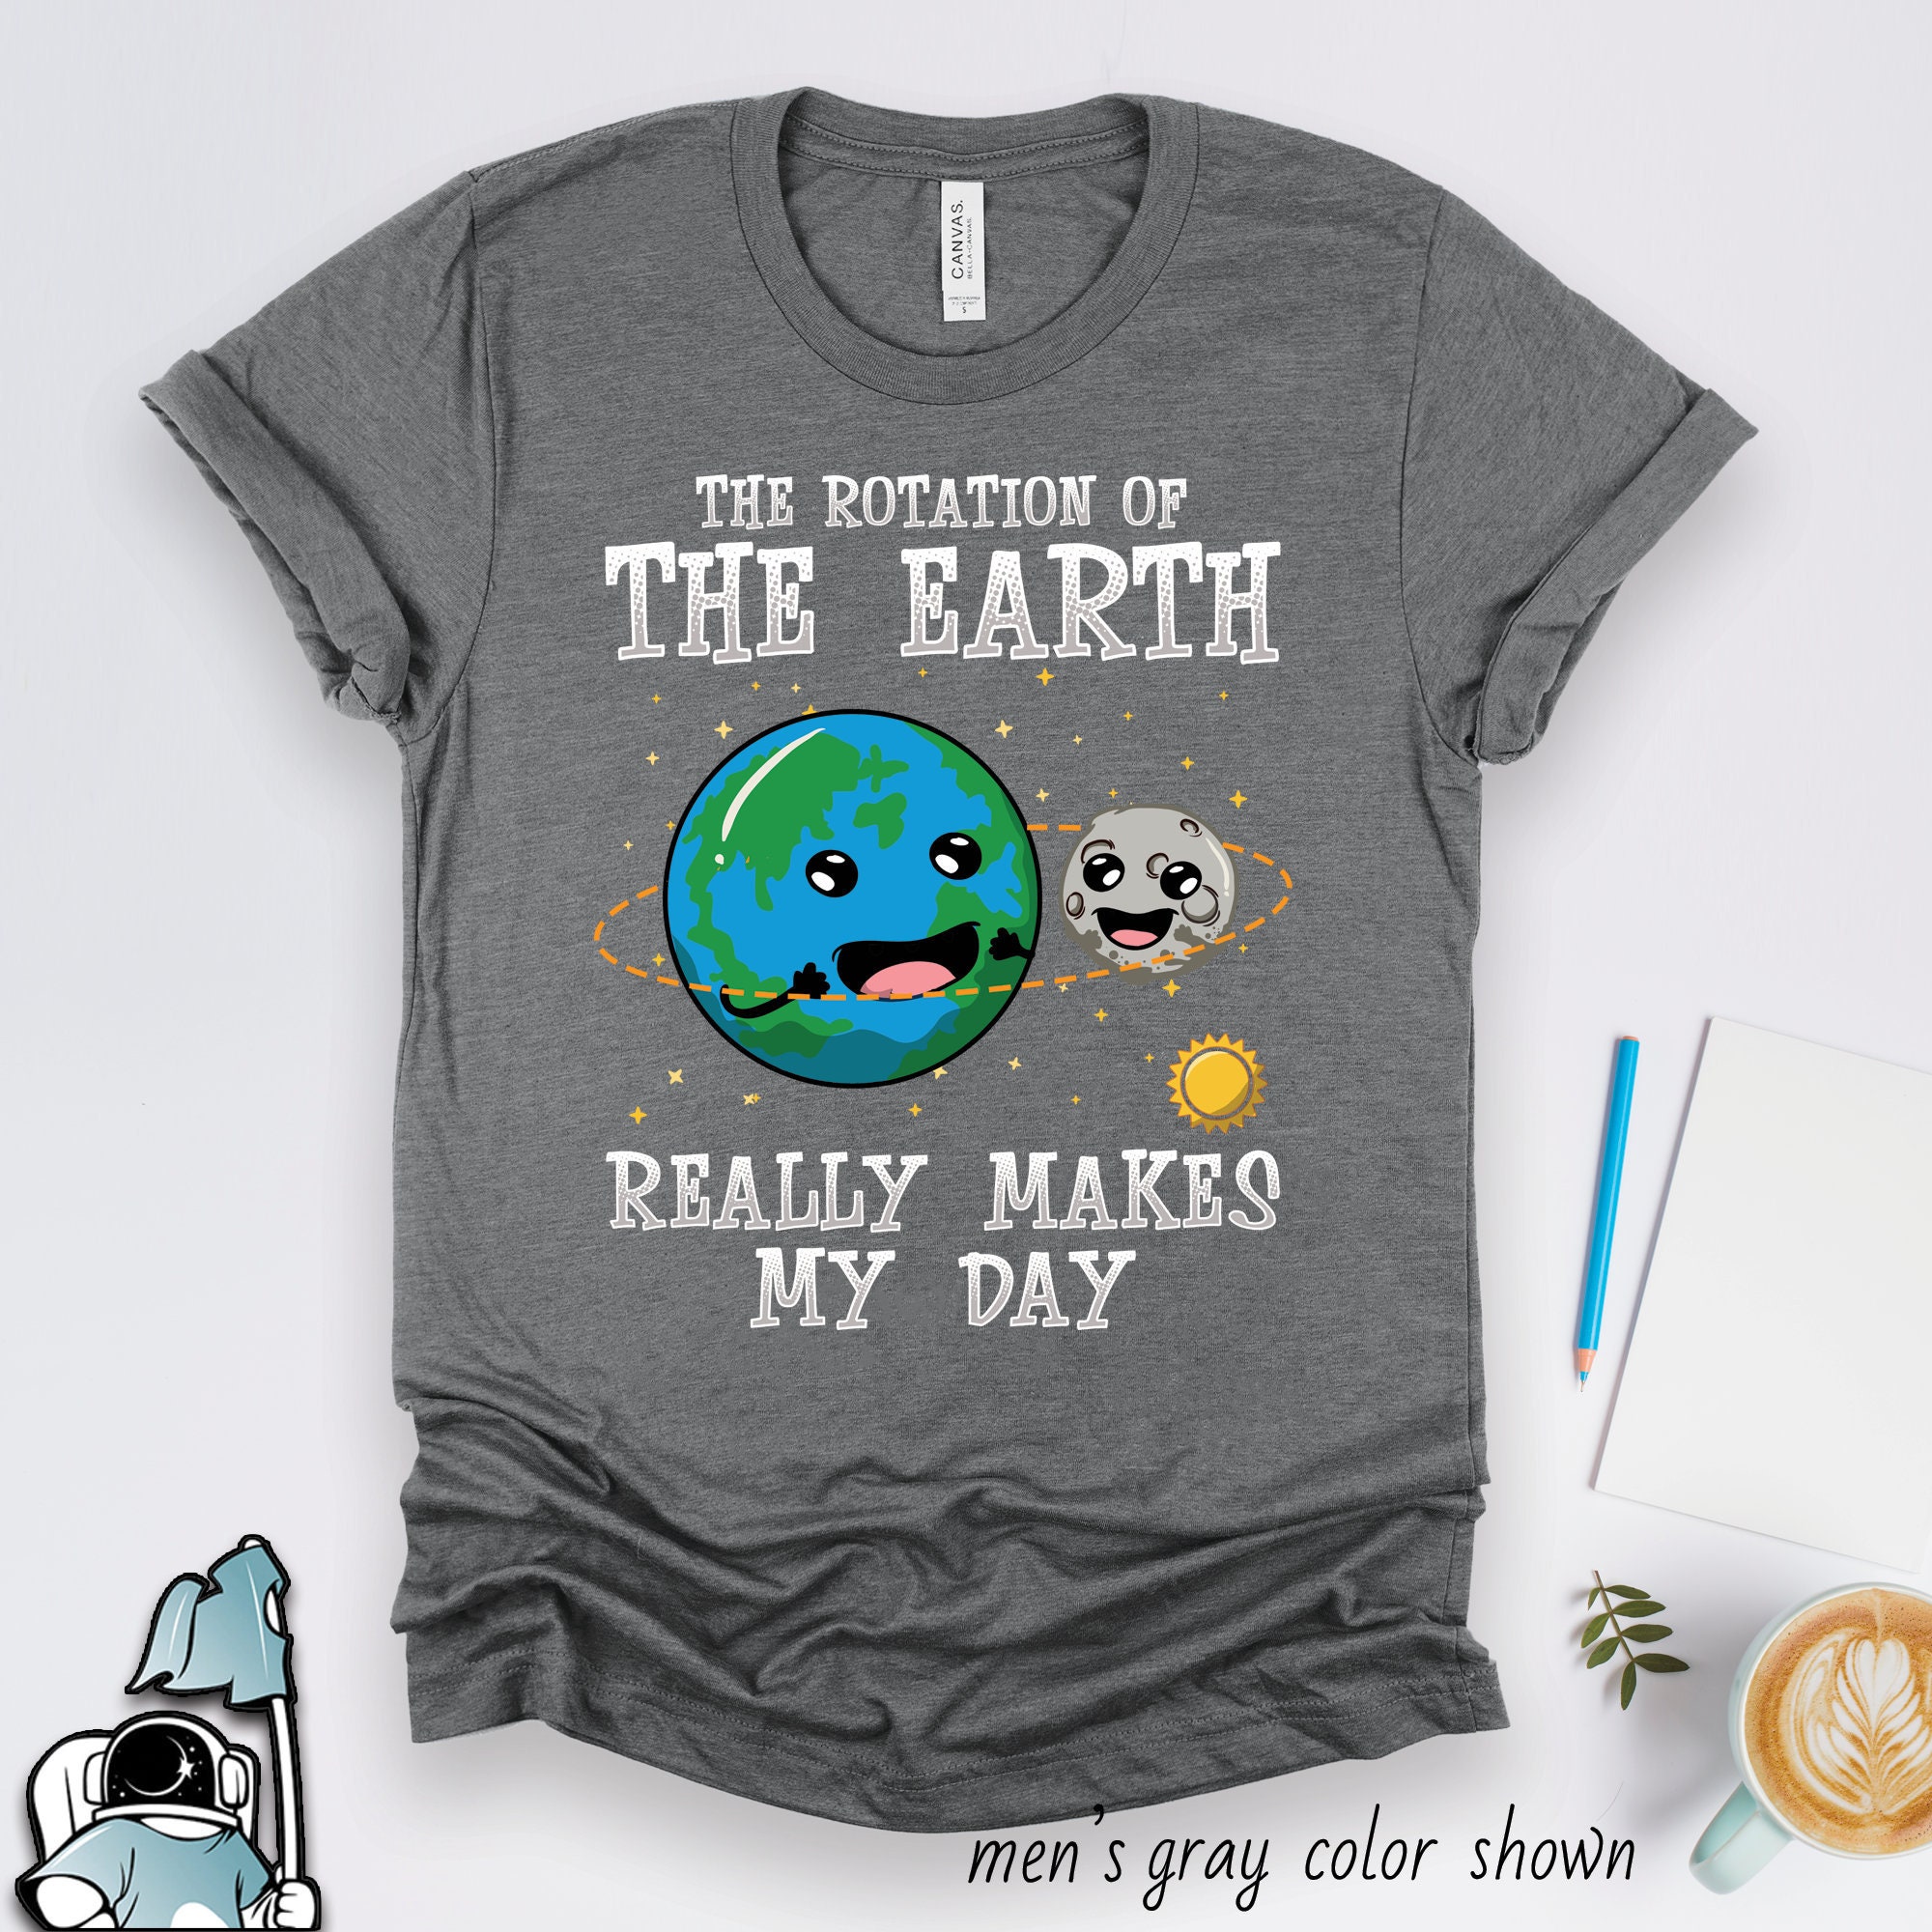 Earth Shirt Funny Space Shirt Earth's Rotation Makes My - Etsy